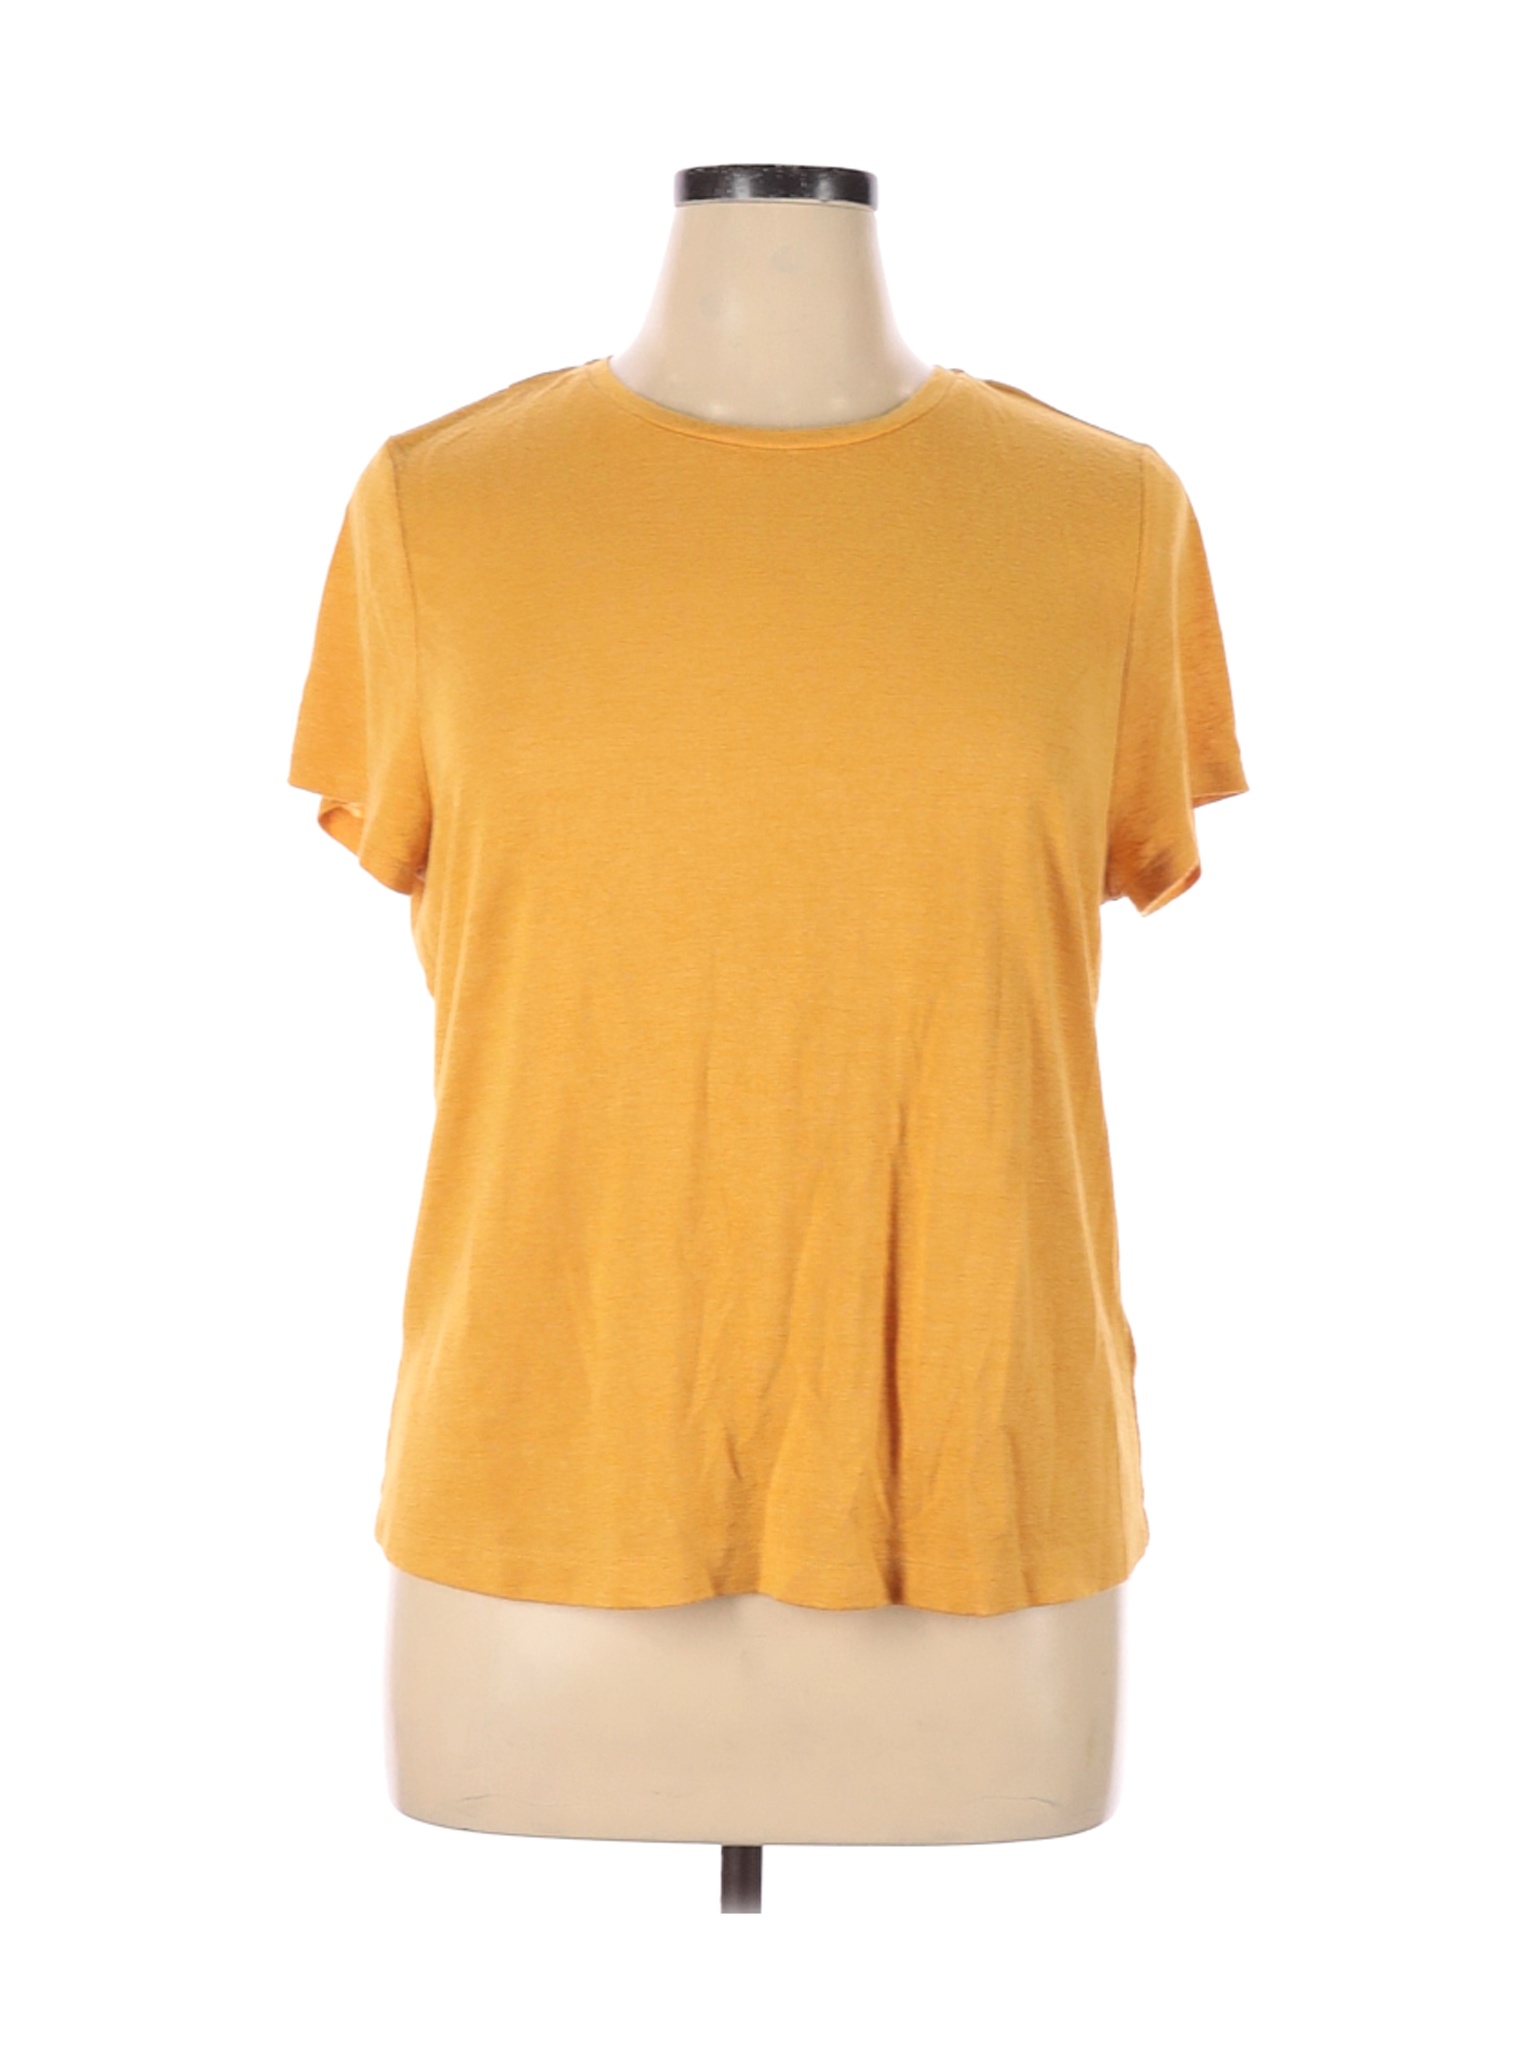 Universal Thread Women Yellow Short Sleeve T-Shirt XXL | eBay